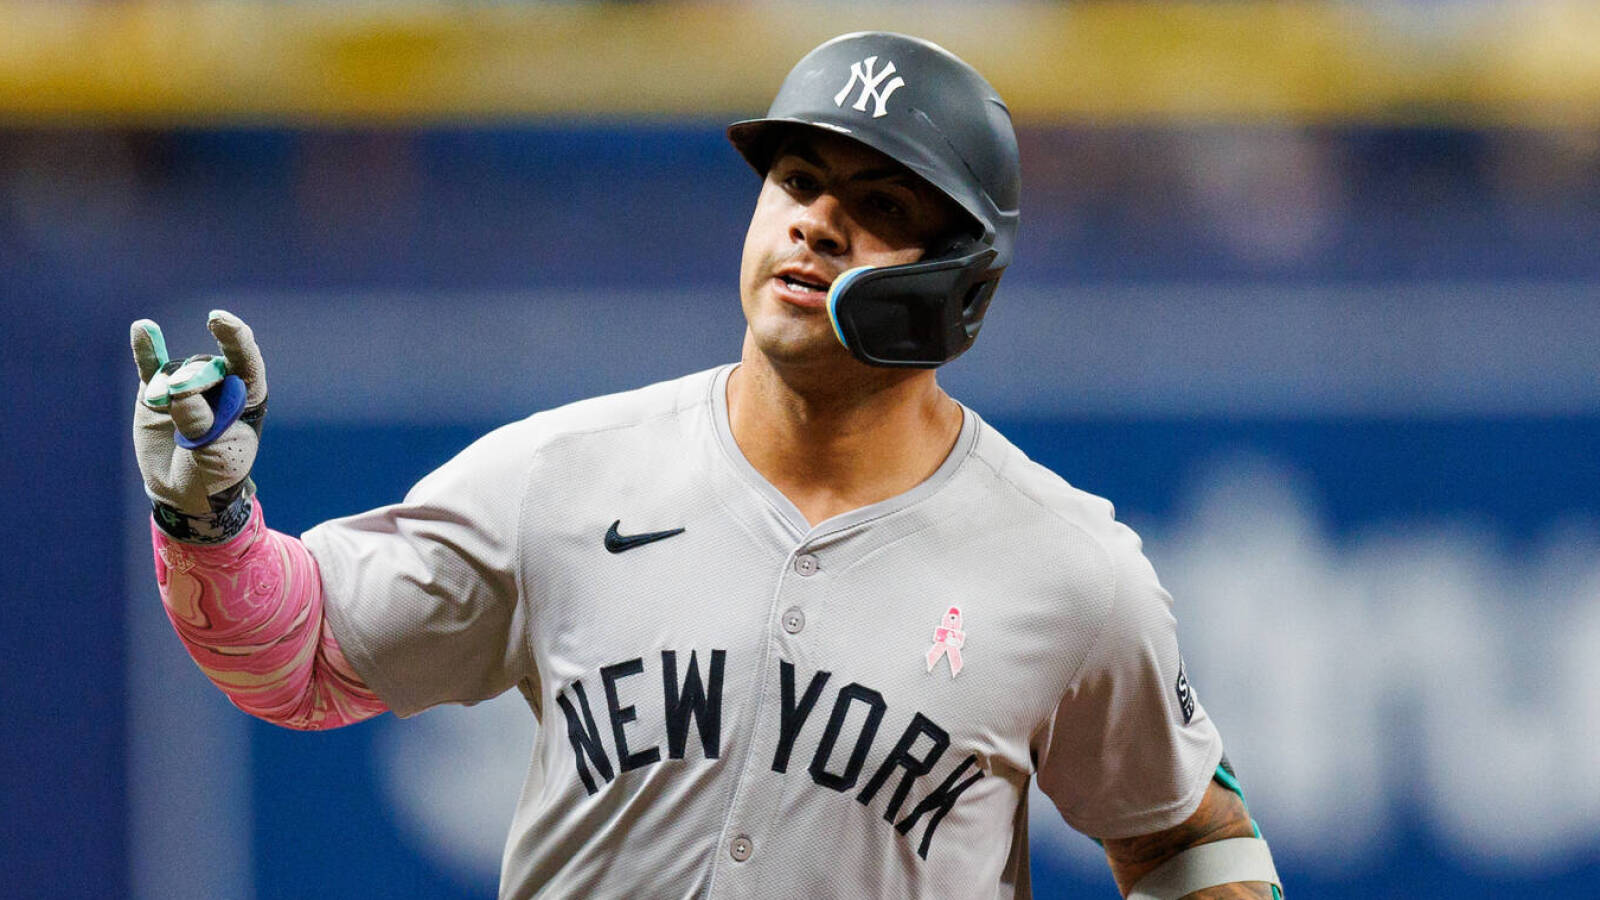 Yankees star going through slow stretch during pivotal season